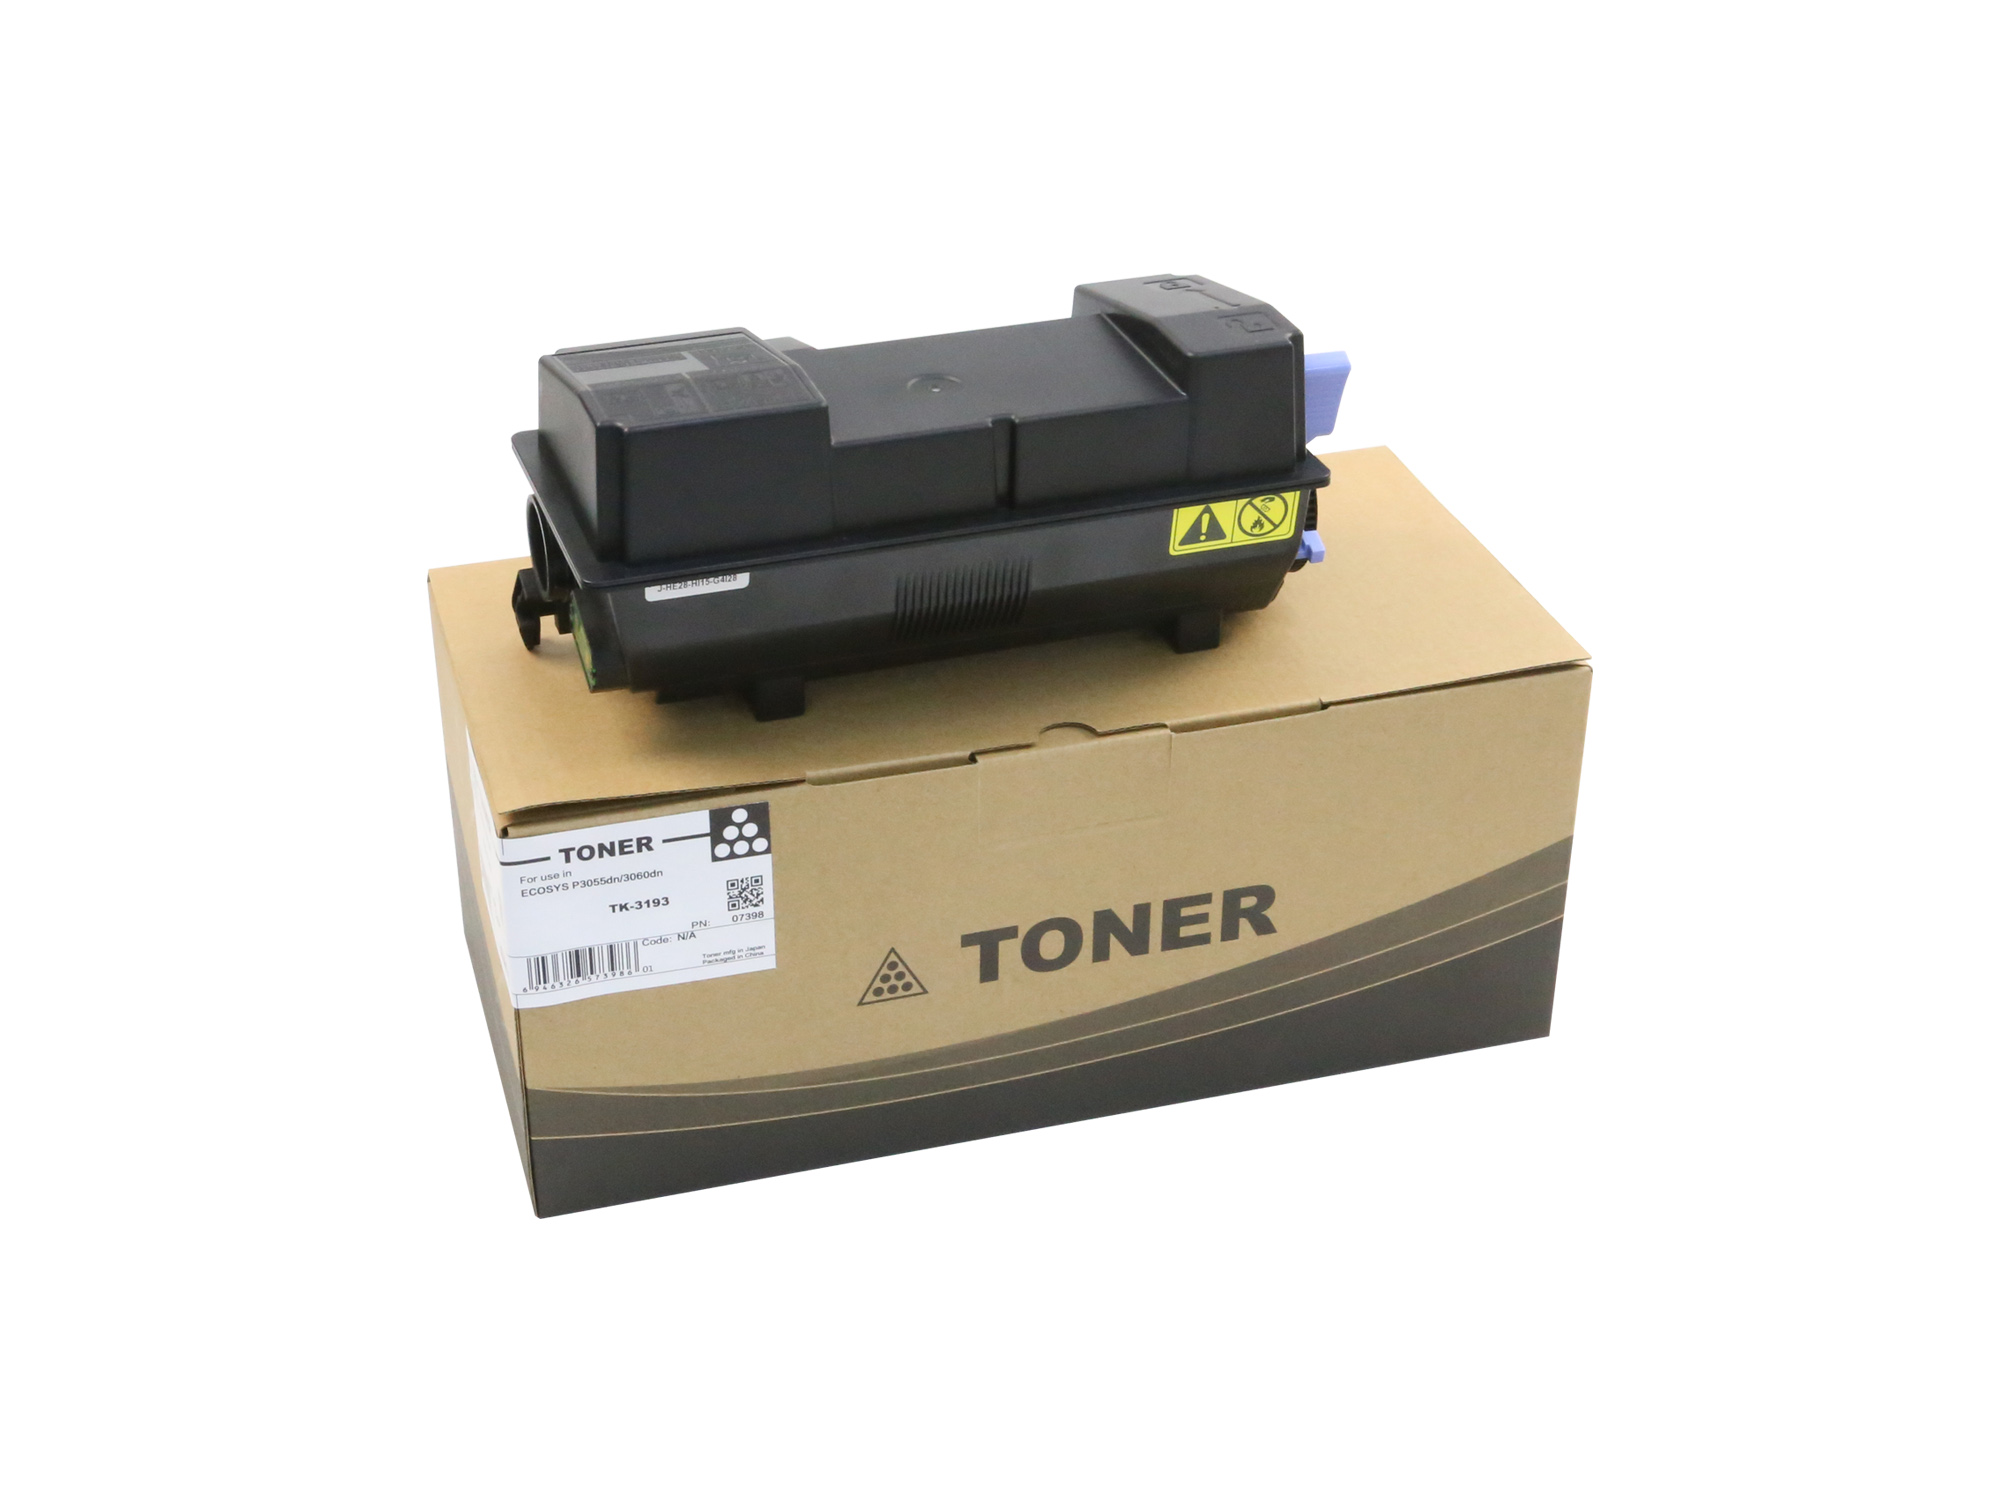 TK-3193 Toner Cartridge for Kyocera ECOSYS P3055dn